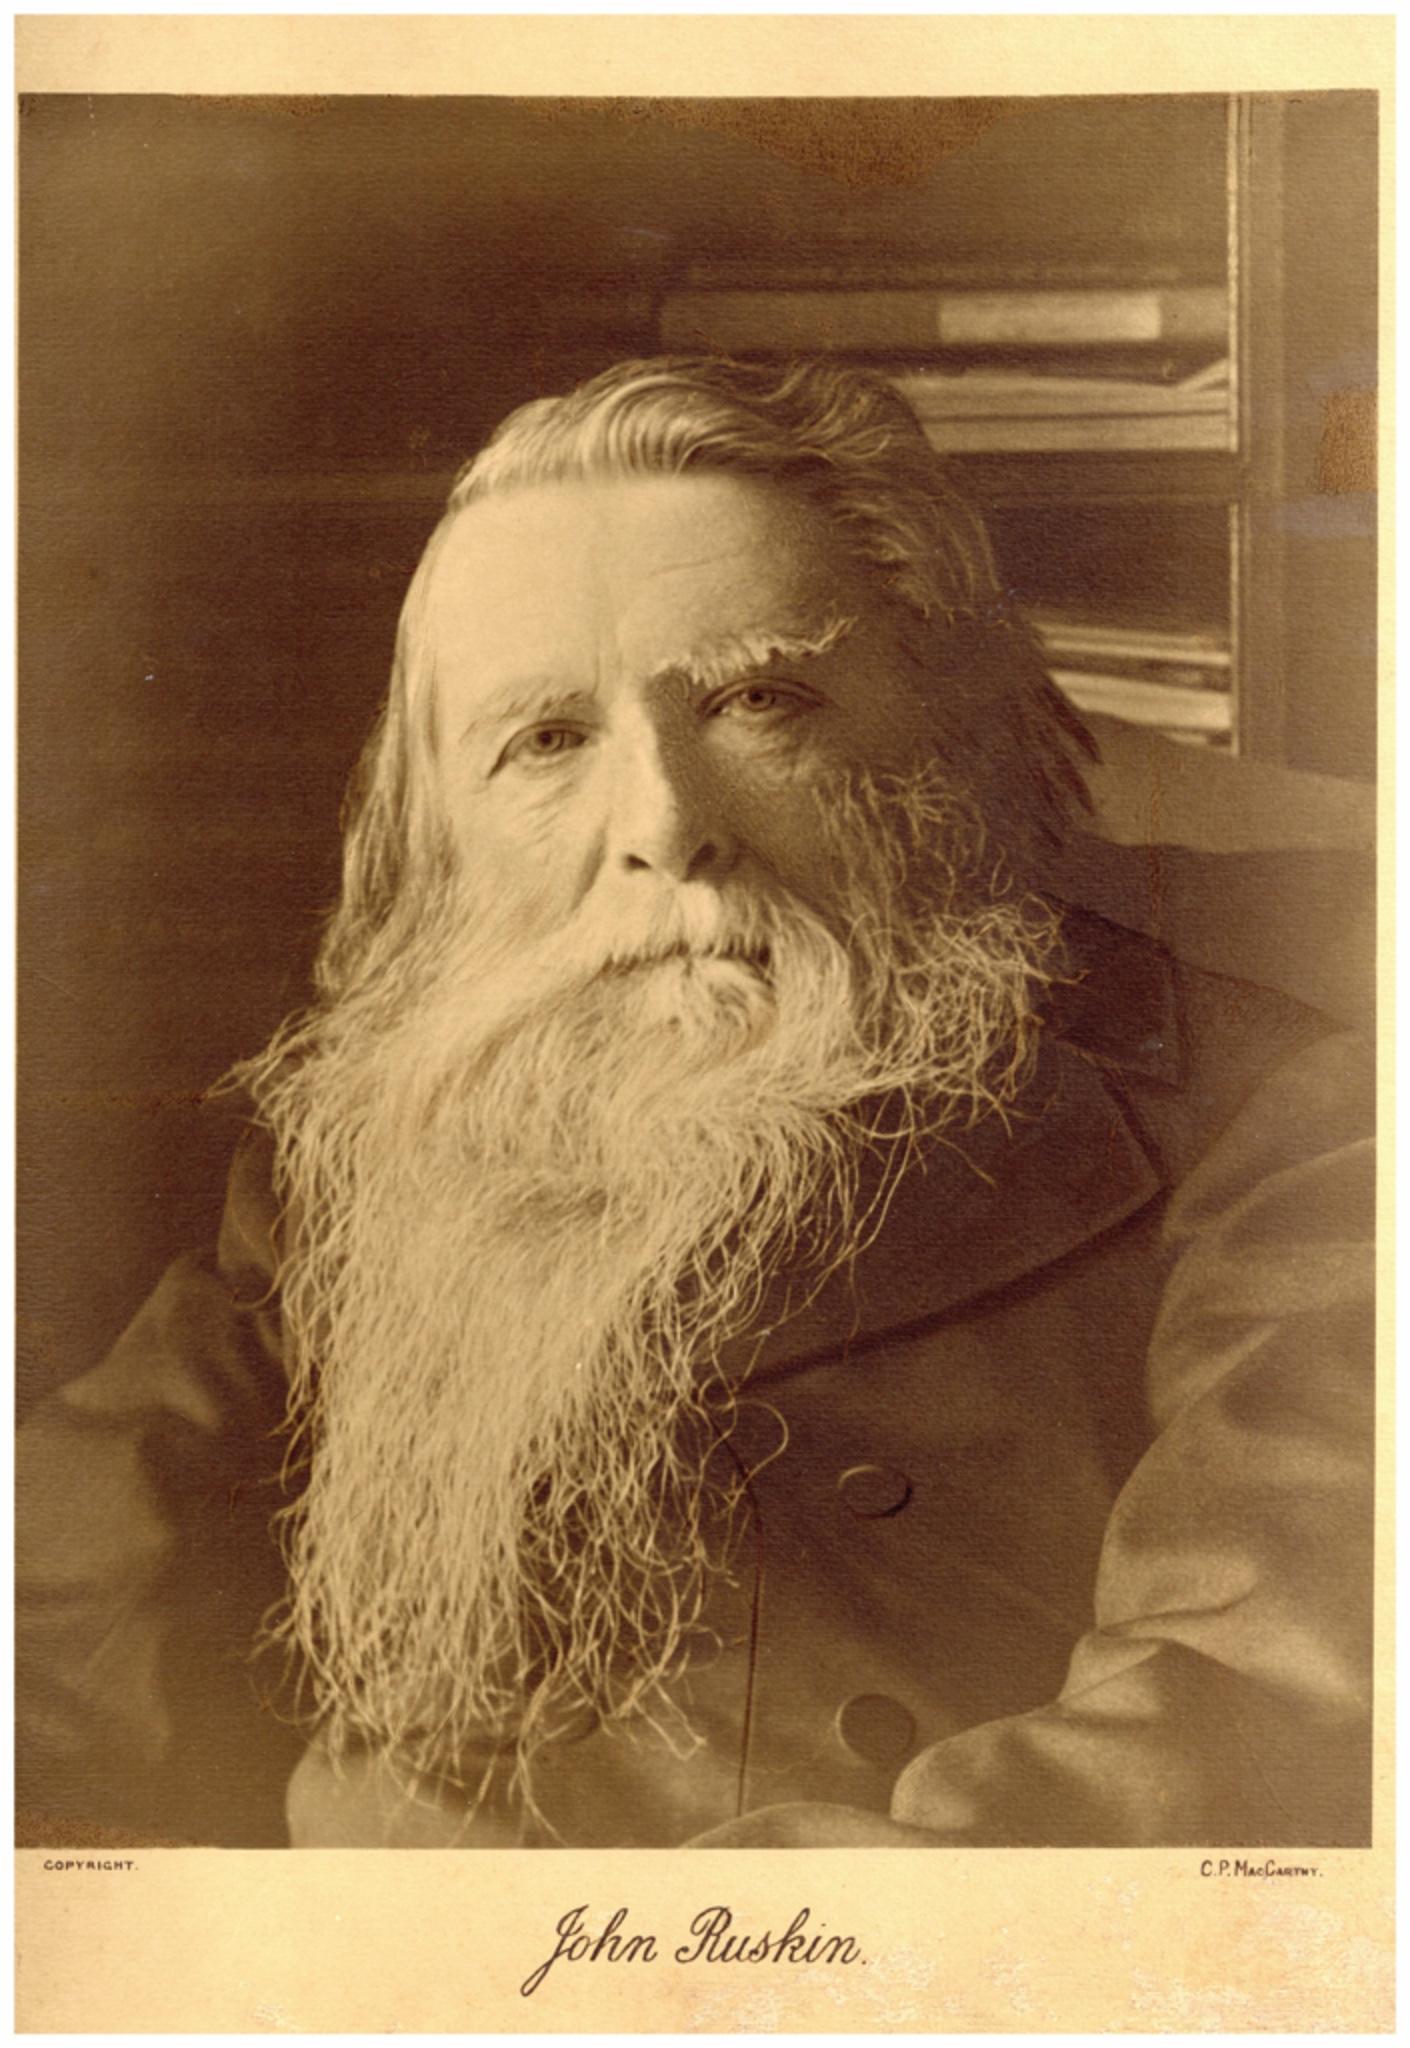 Portrait of John Ruskin - Photograph by Charles Philip McCarthy - 1890s